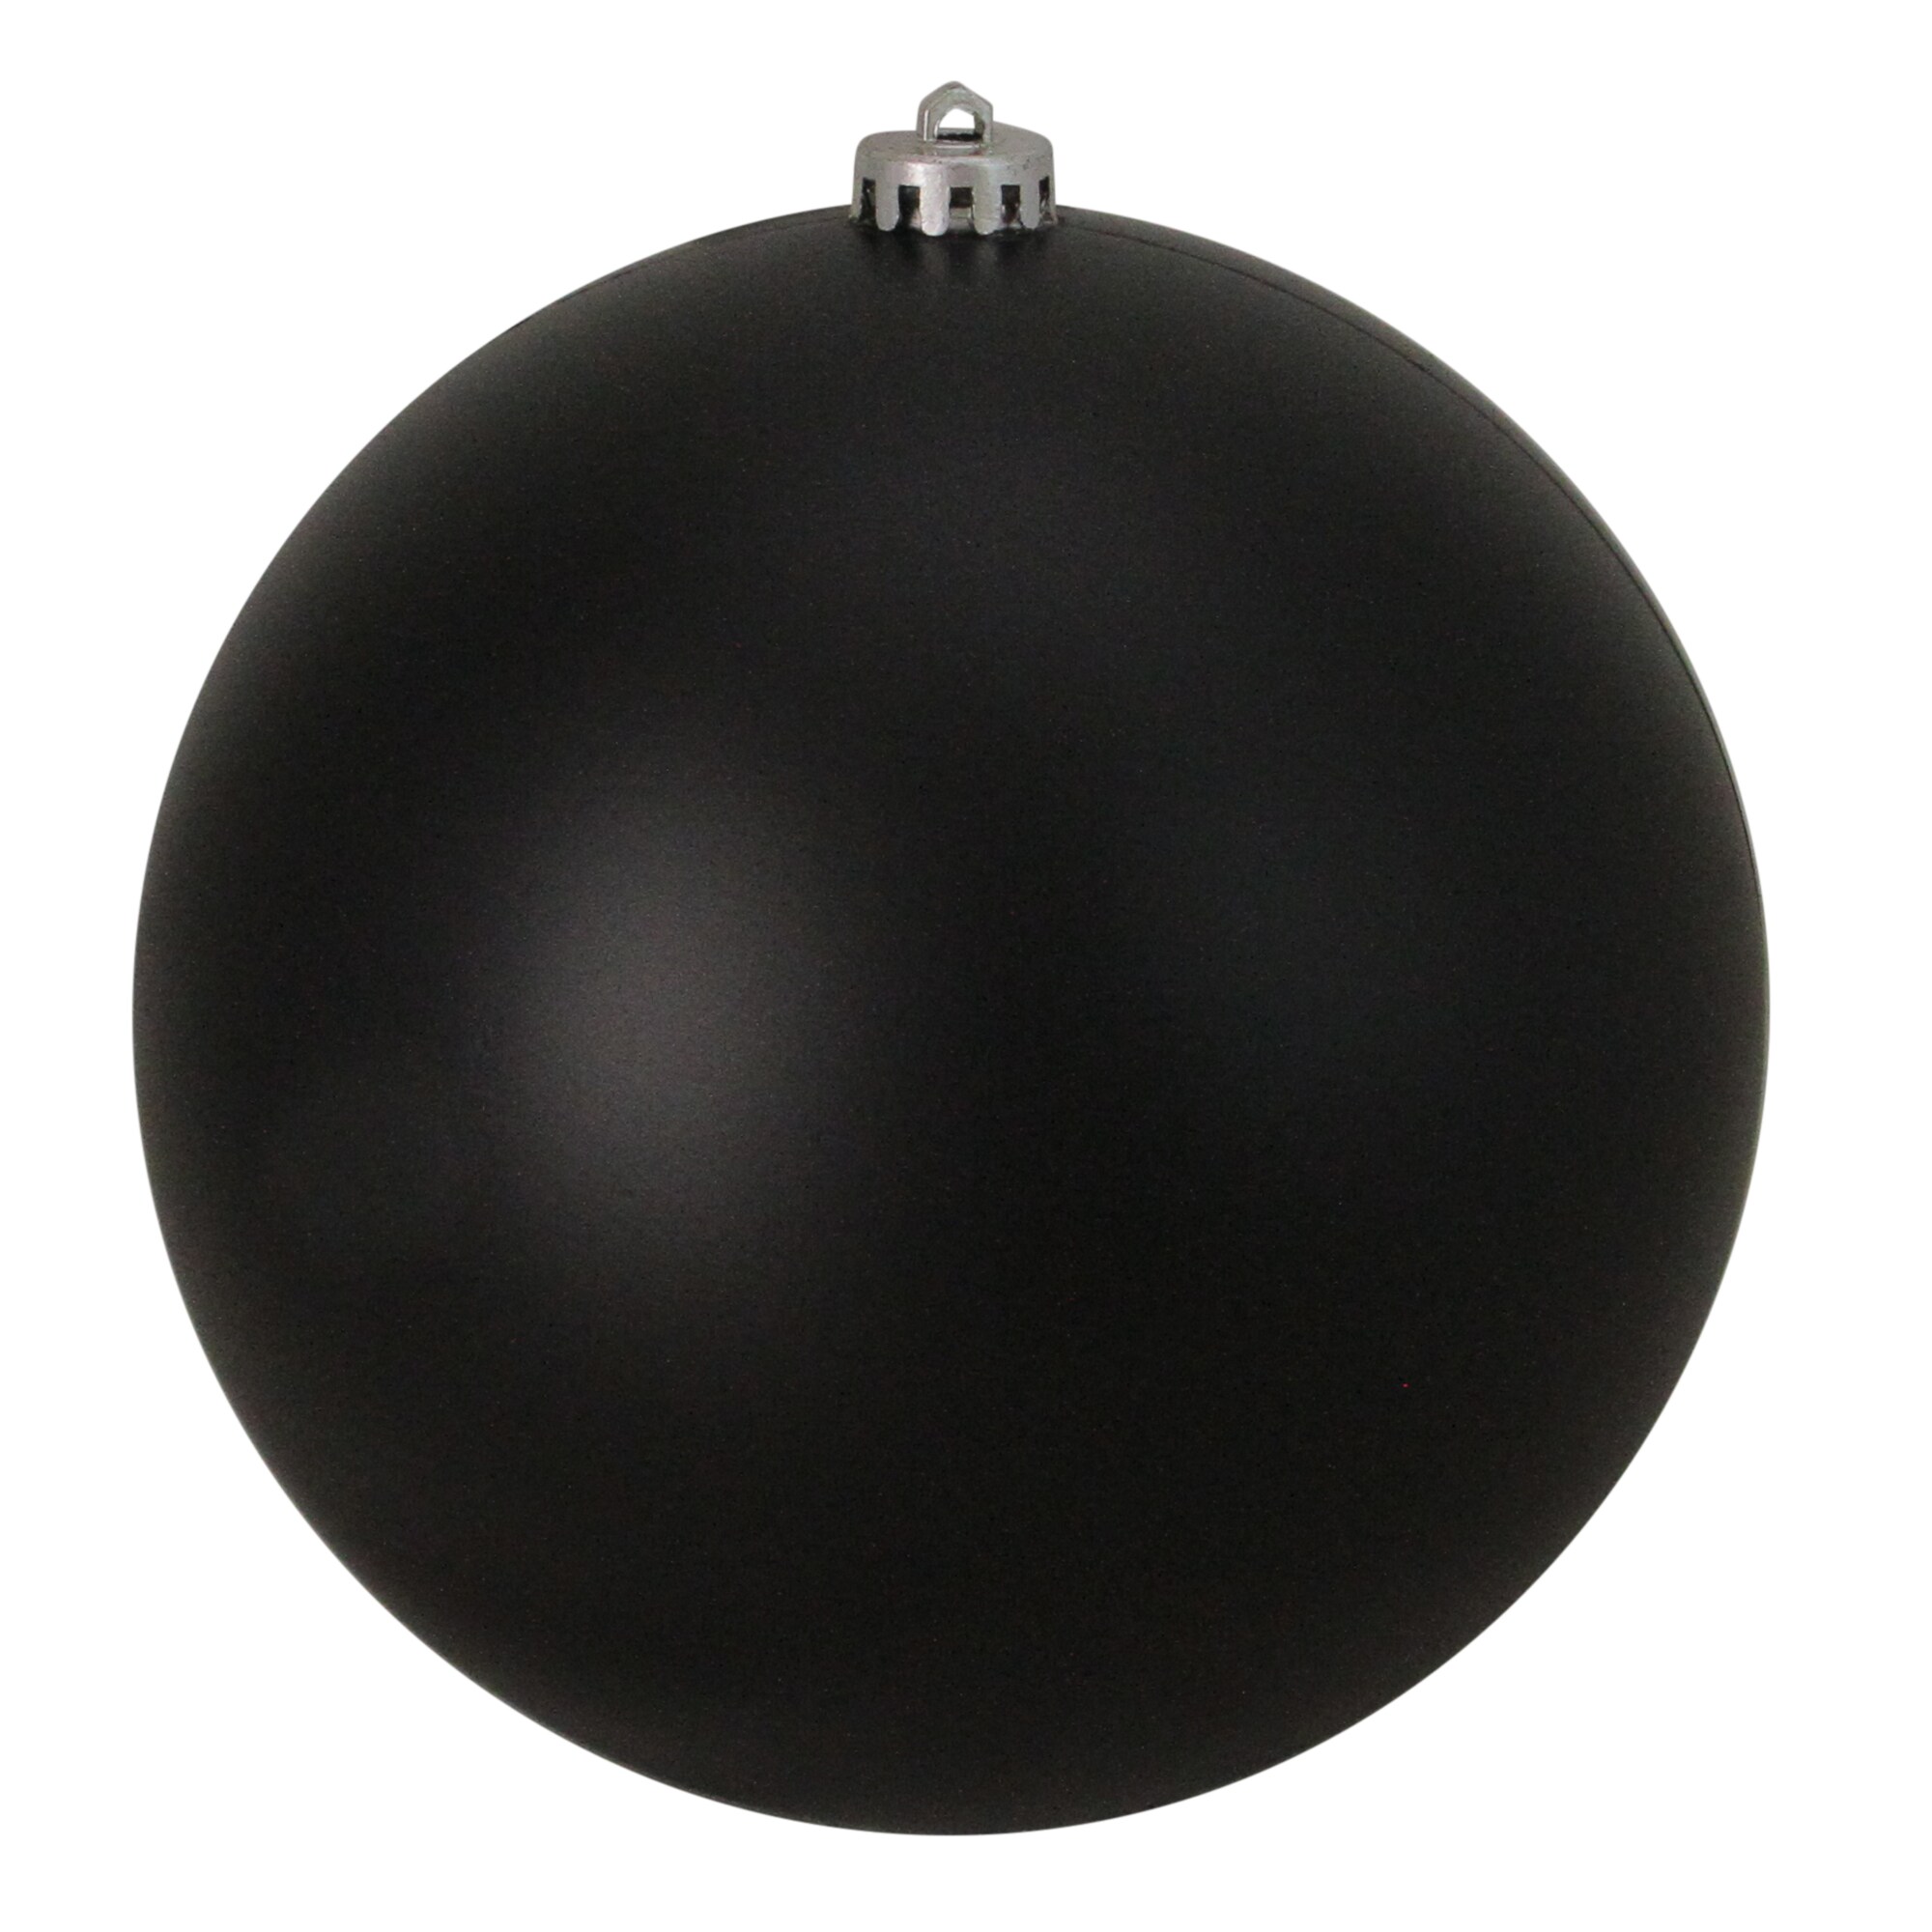 Northlight Black Ball Standard Indoor Ornament Shatterproof at Lowes.com